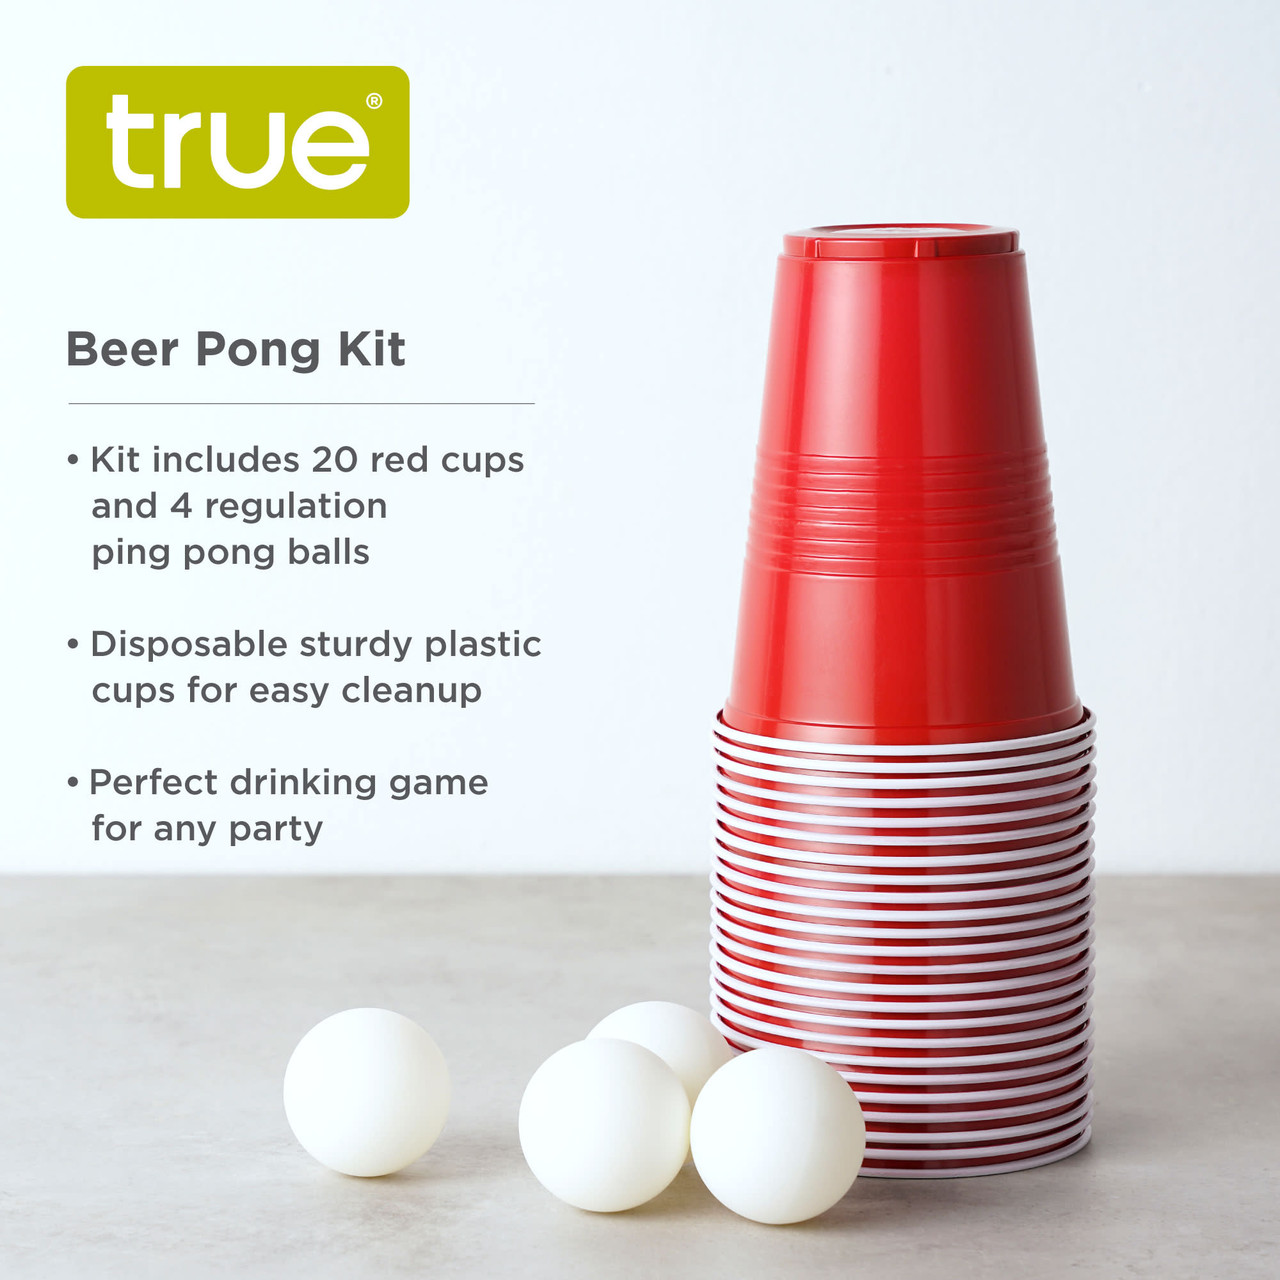 Beer Pong Kit